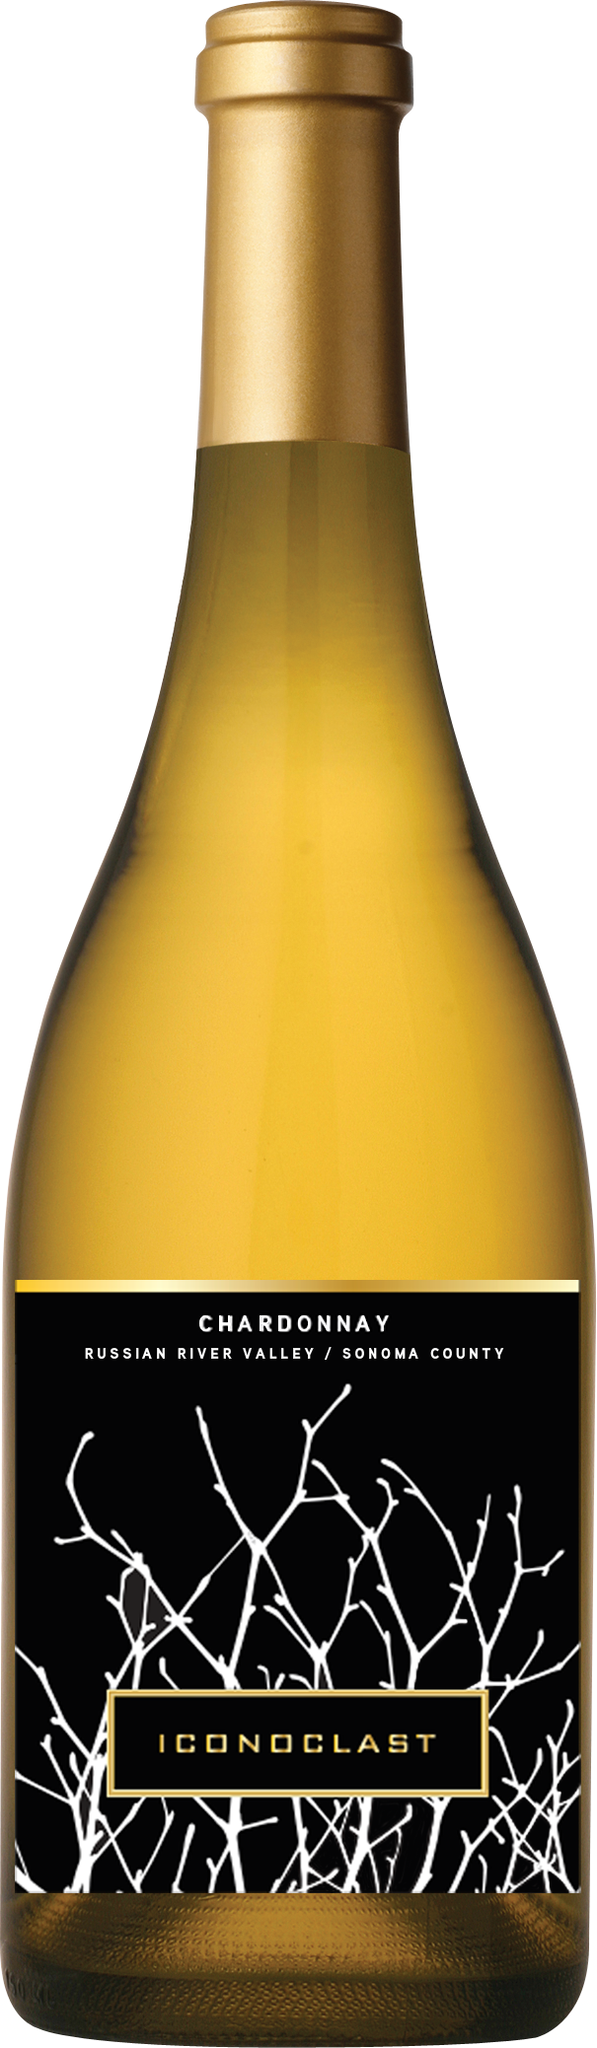 Iconoclast Chardonnay 2019